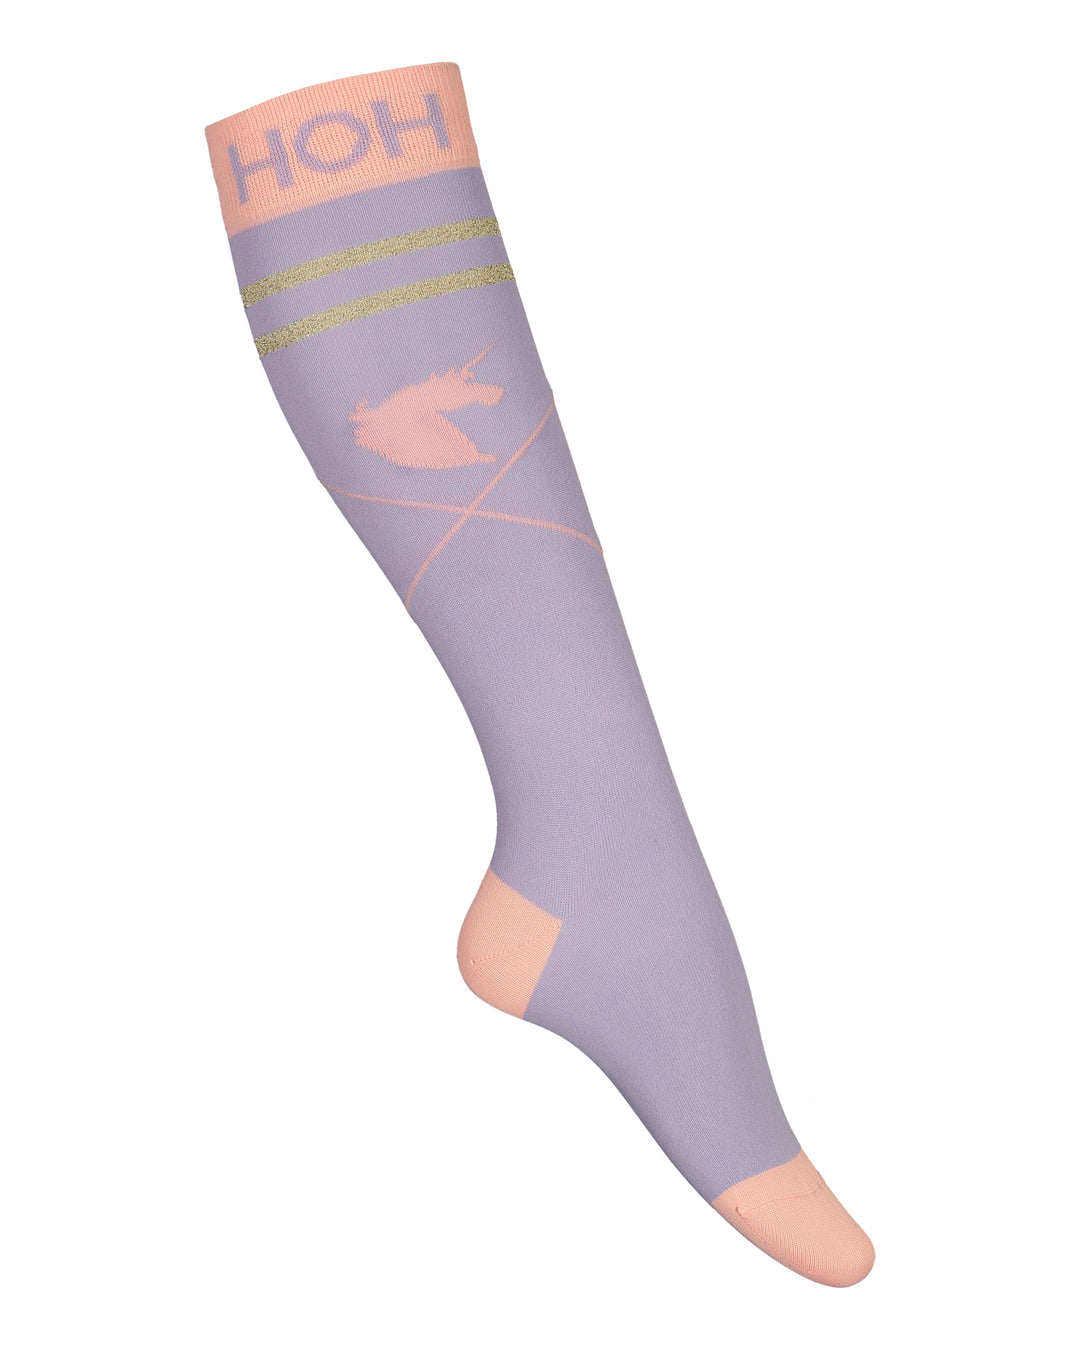 HoH Long Lavender Unicorn Socks